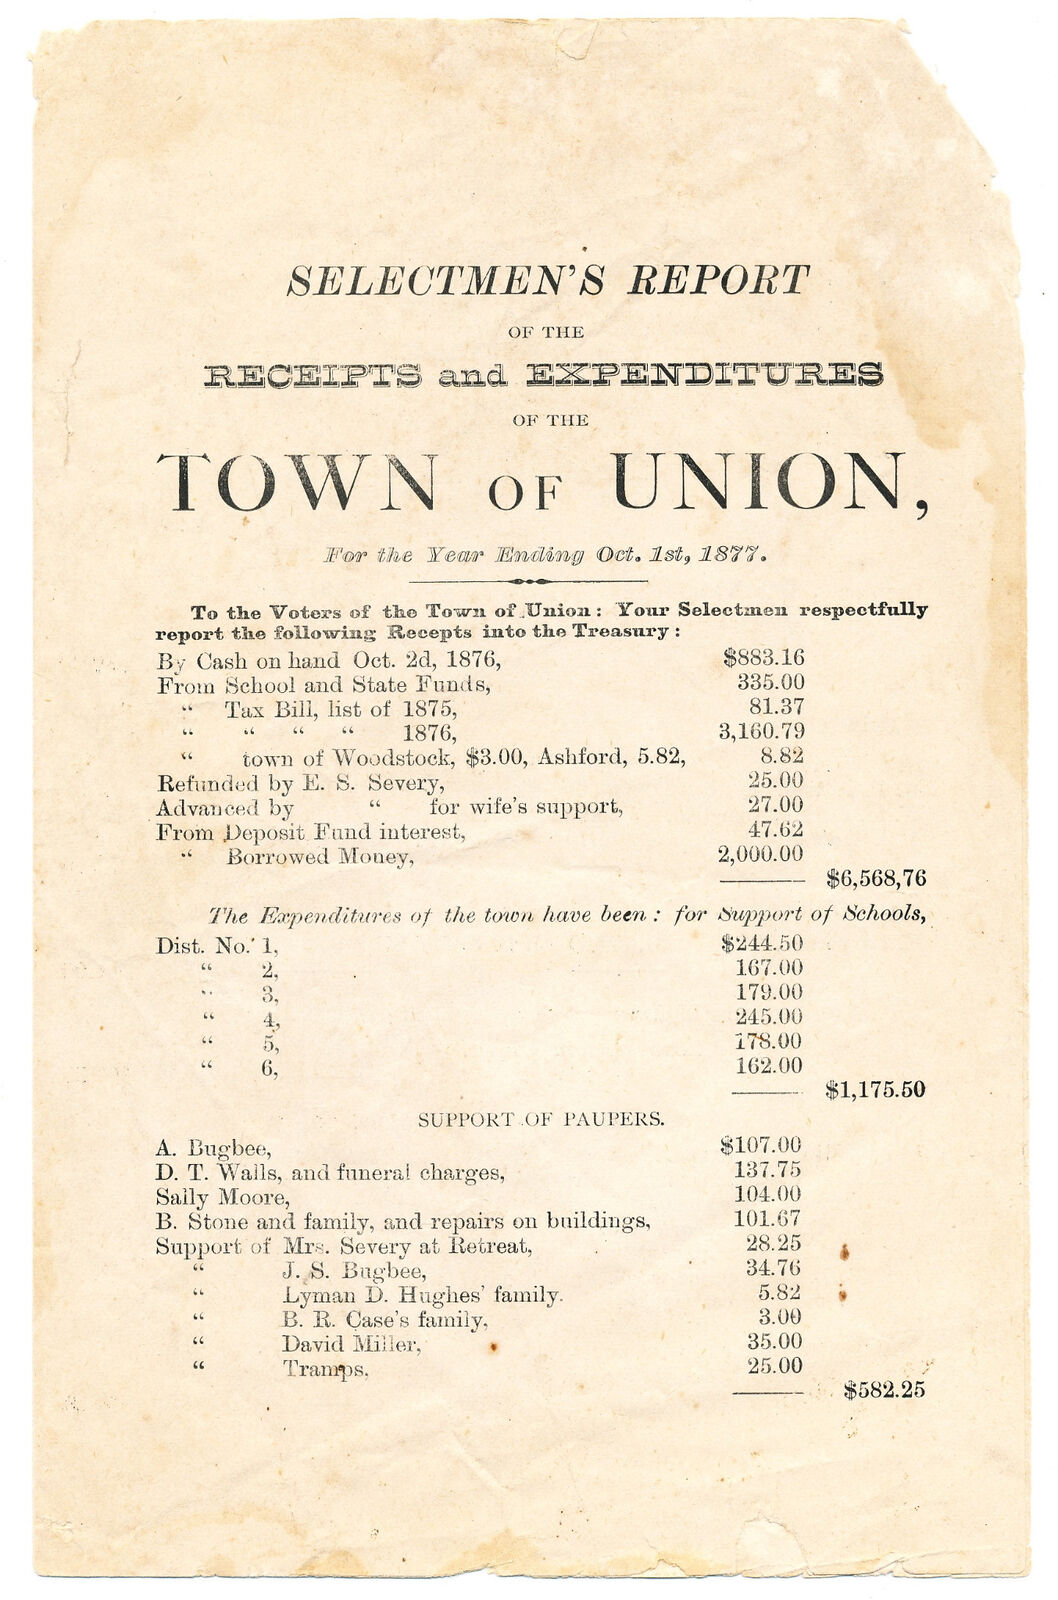 VINTAGE 1877 SELECTMEN'S REPORT - TOWN OF UNION CONNECTICUT - EXPENDITURES